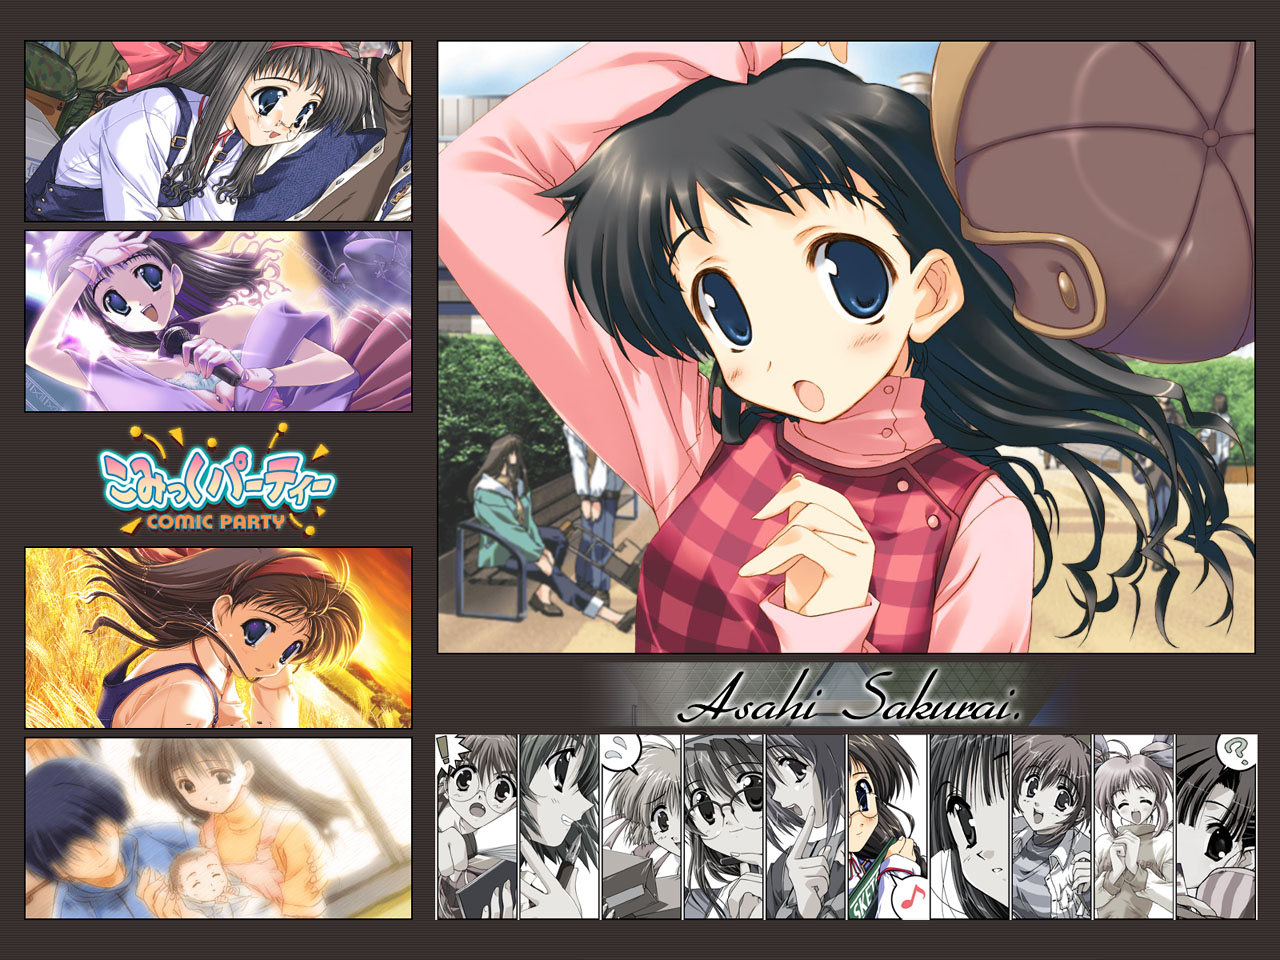 1452265 descargar imagen animado, komikku pâtî, sakurai asahi: fondos de pantalla y protectores de pantalla gratis